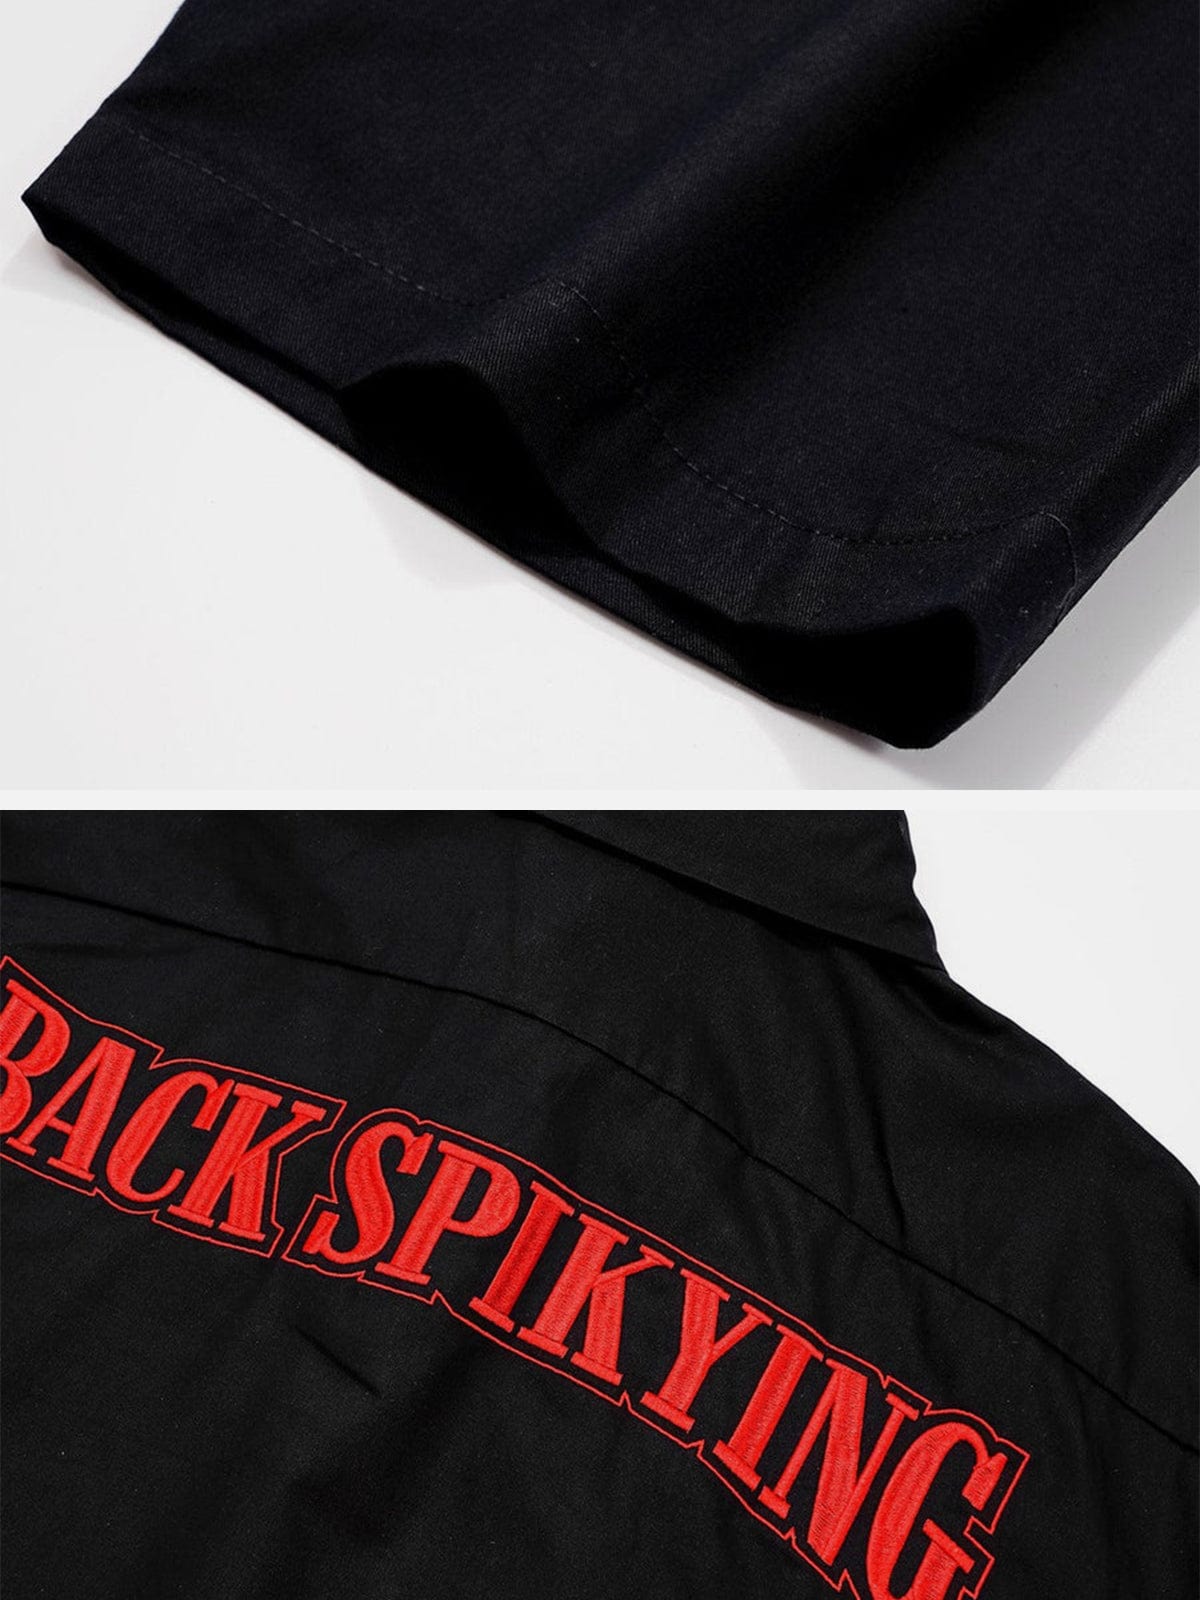 Dark Letters Embroidery Shirt Streetwear Brand Techwear Combat Tactical YUGEN THEORY